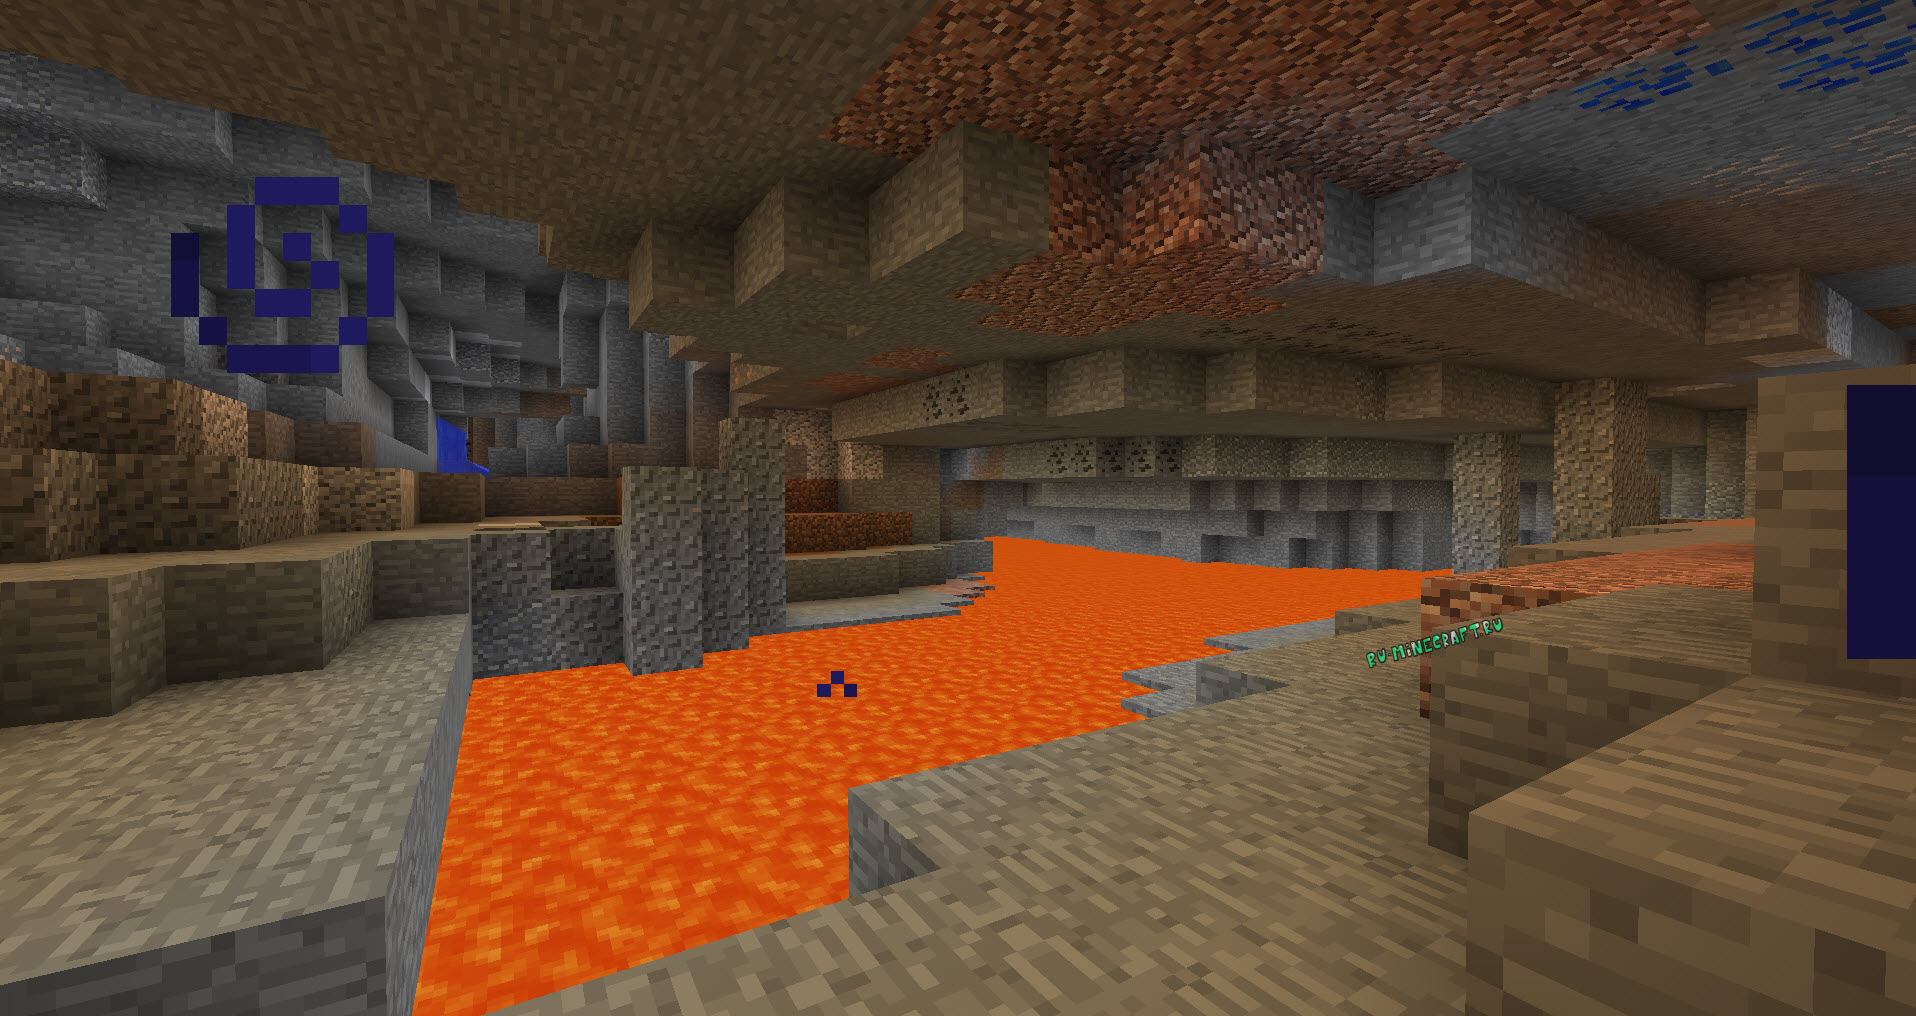 Caves 1 16 5. Bettercaves-Forge-1.16.4-1.1.2. Minecraft пещеры 1.12. Улучшенные пещеры 1.16.5. Better Caves майнкрафт.